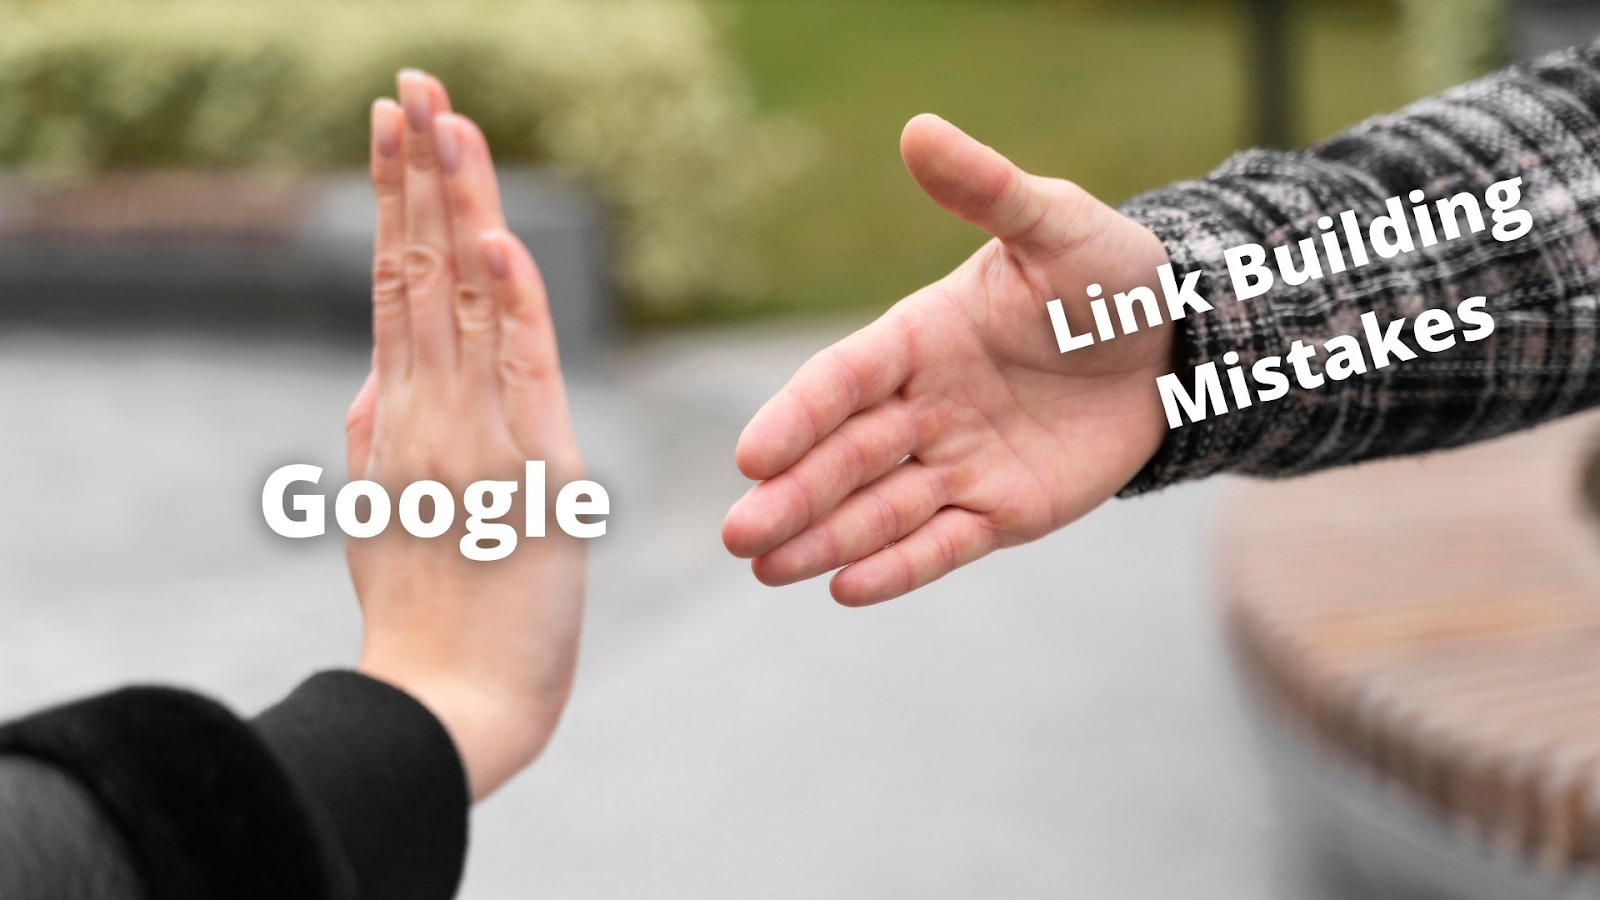 google hates backlink mistakes